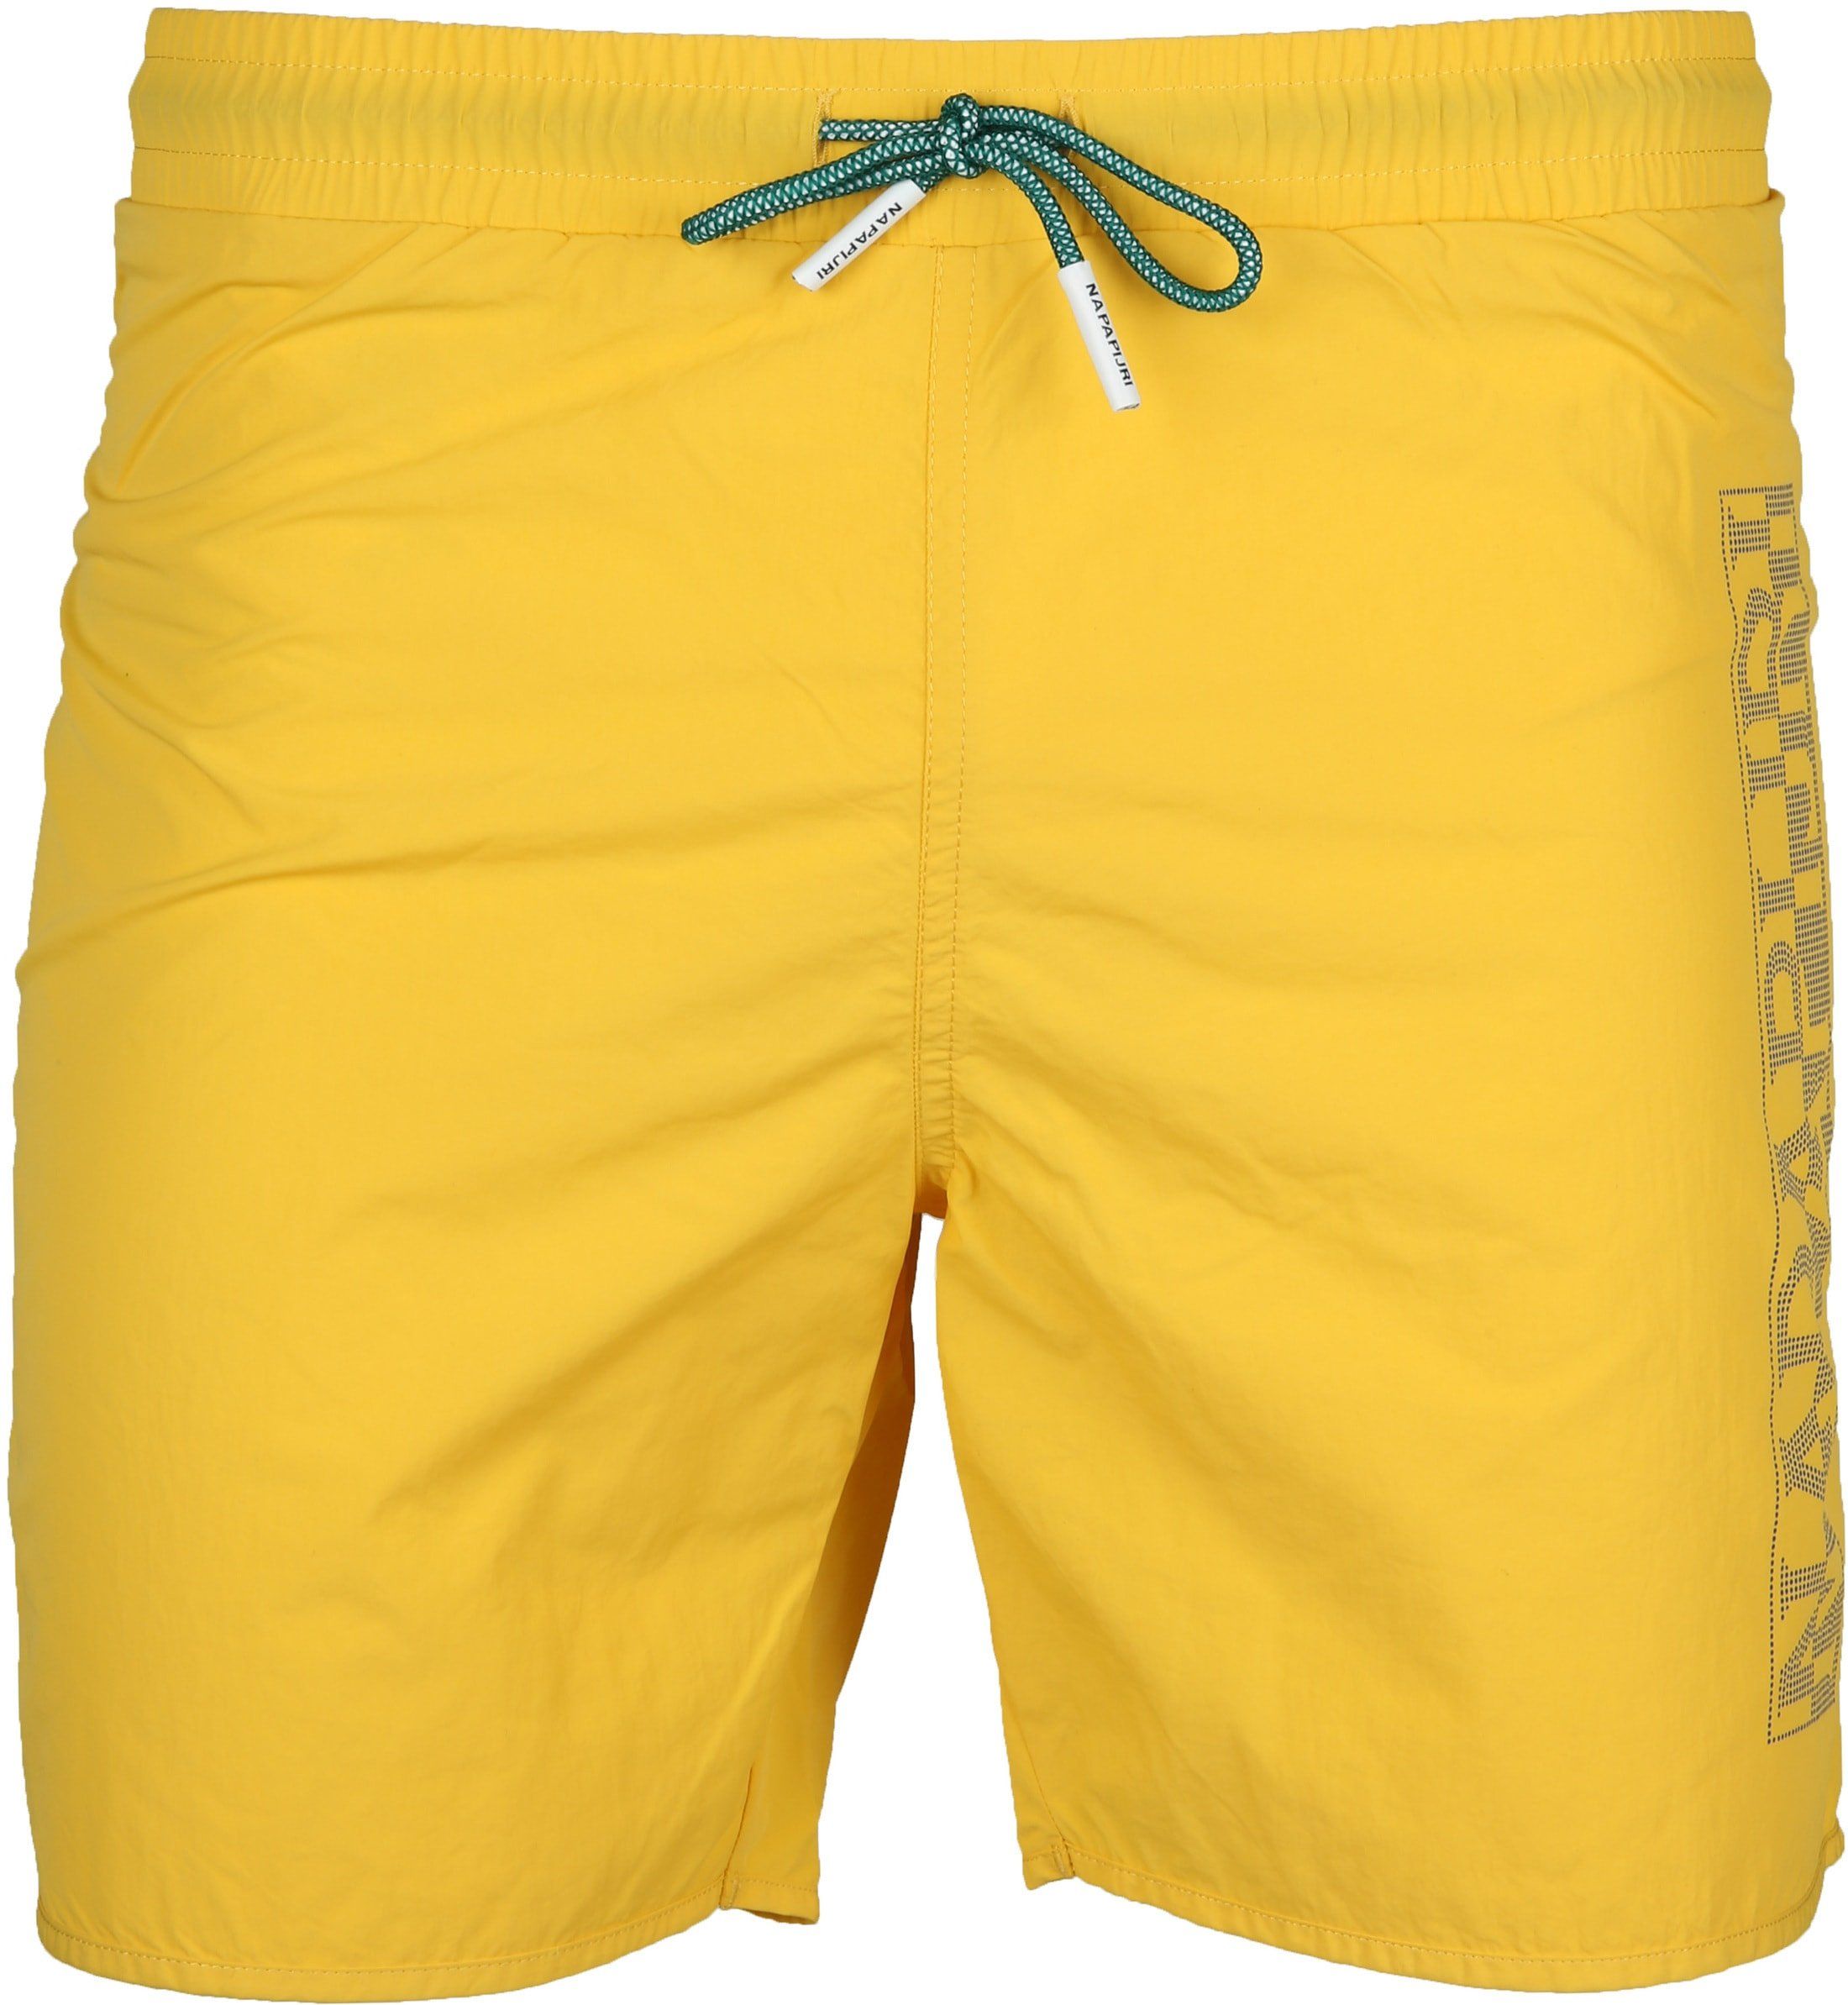 Napapijri Swimshorts Varco Yellow size XL